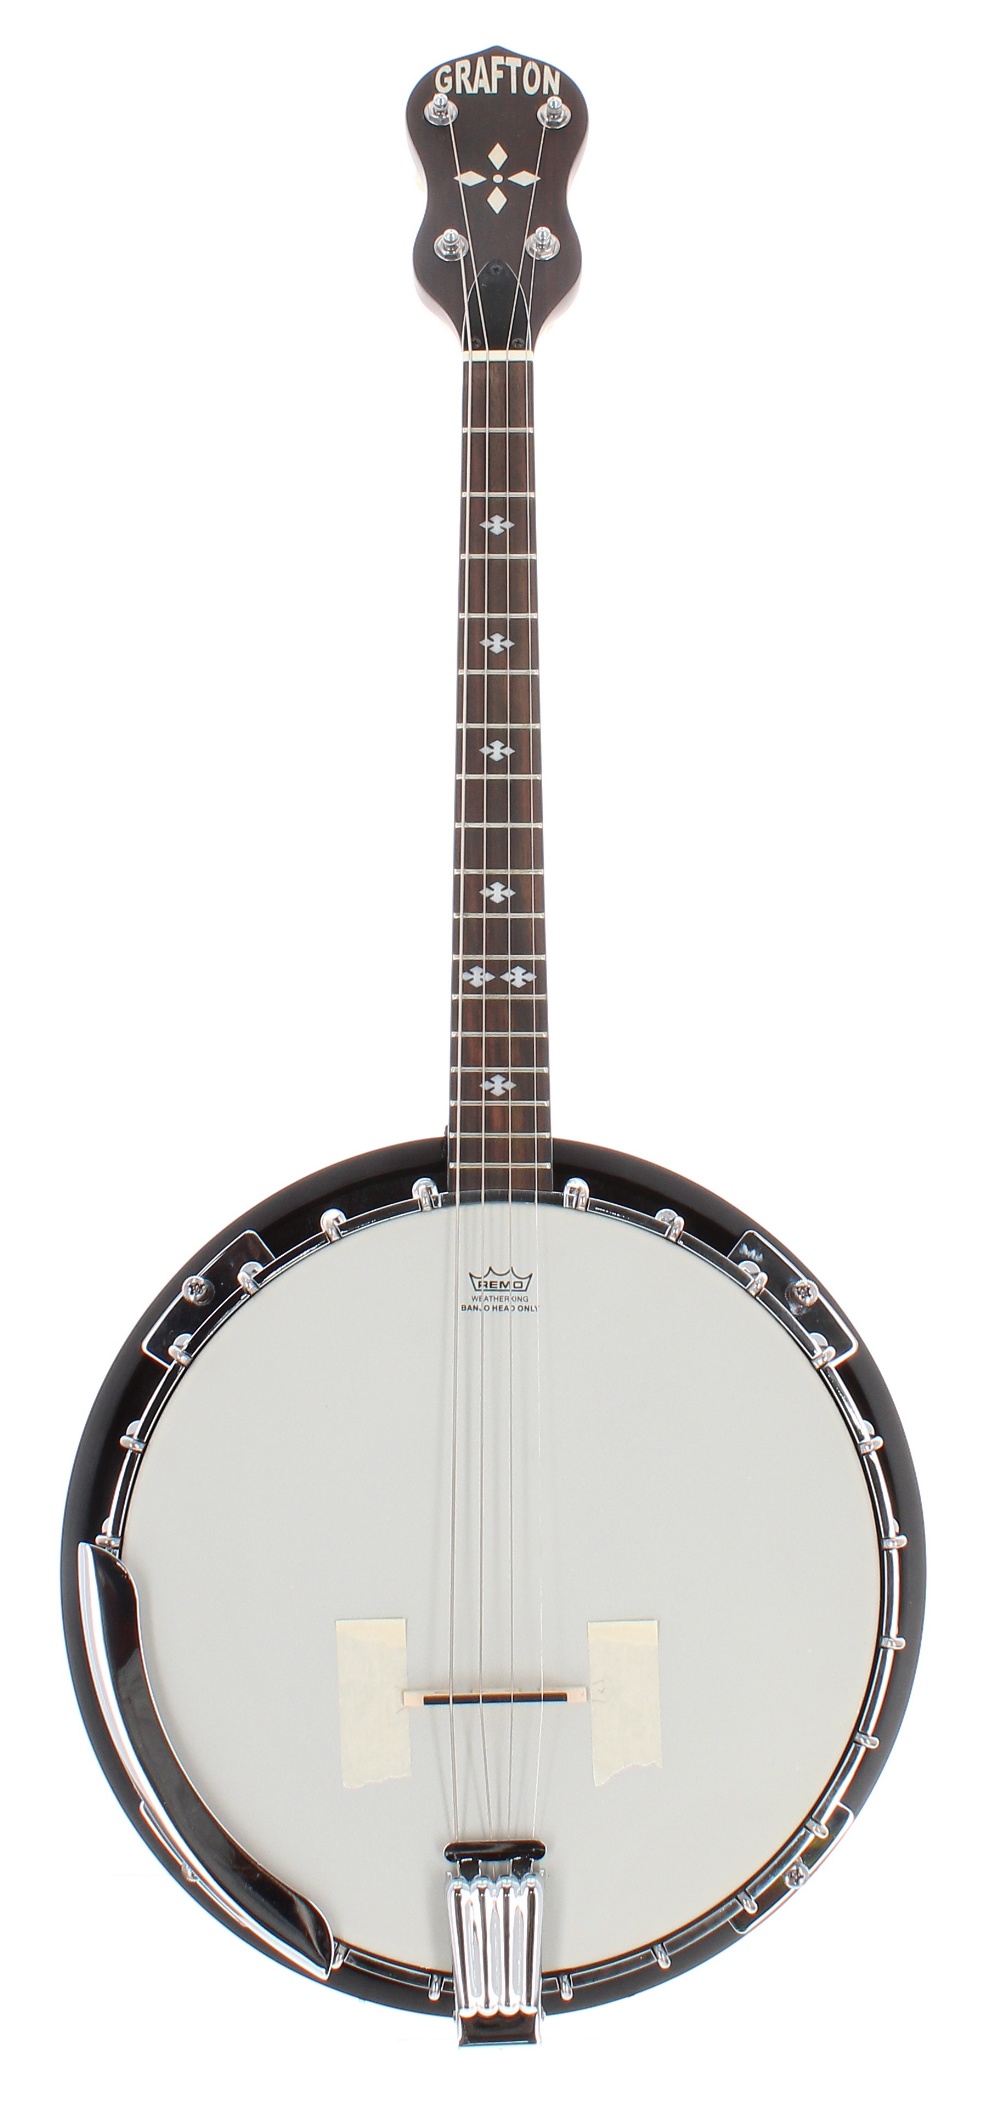 Grafton Clipper tenor banjo, hard case